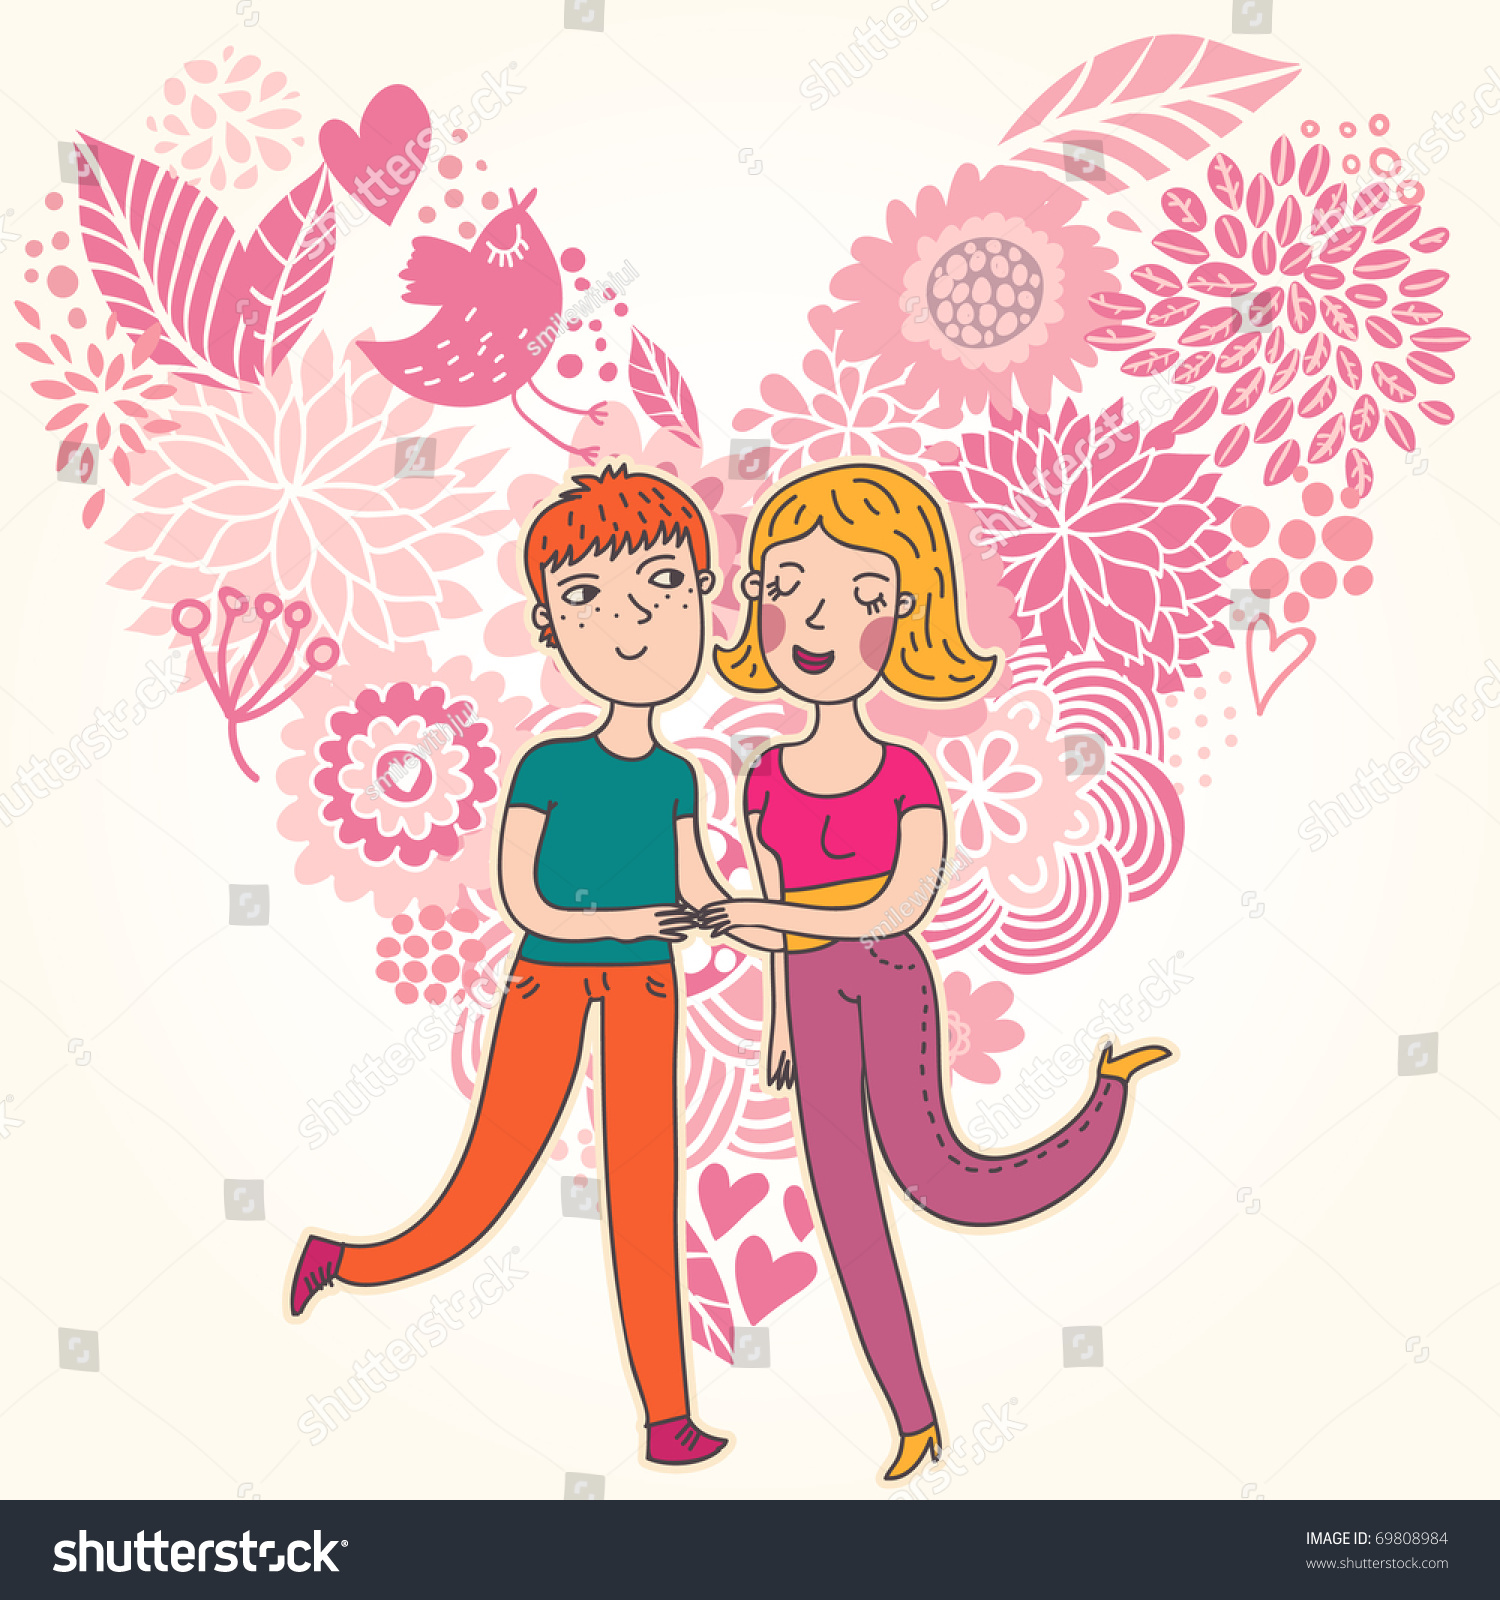 Cartoon Boy And Girl In Love Stock Vector Illustration 69808984 ...